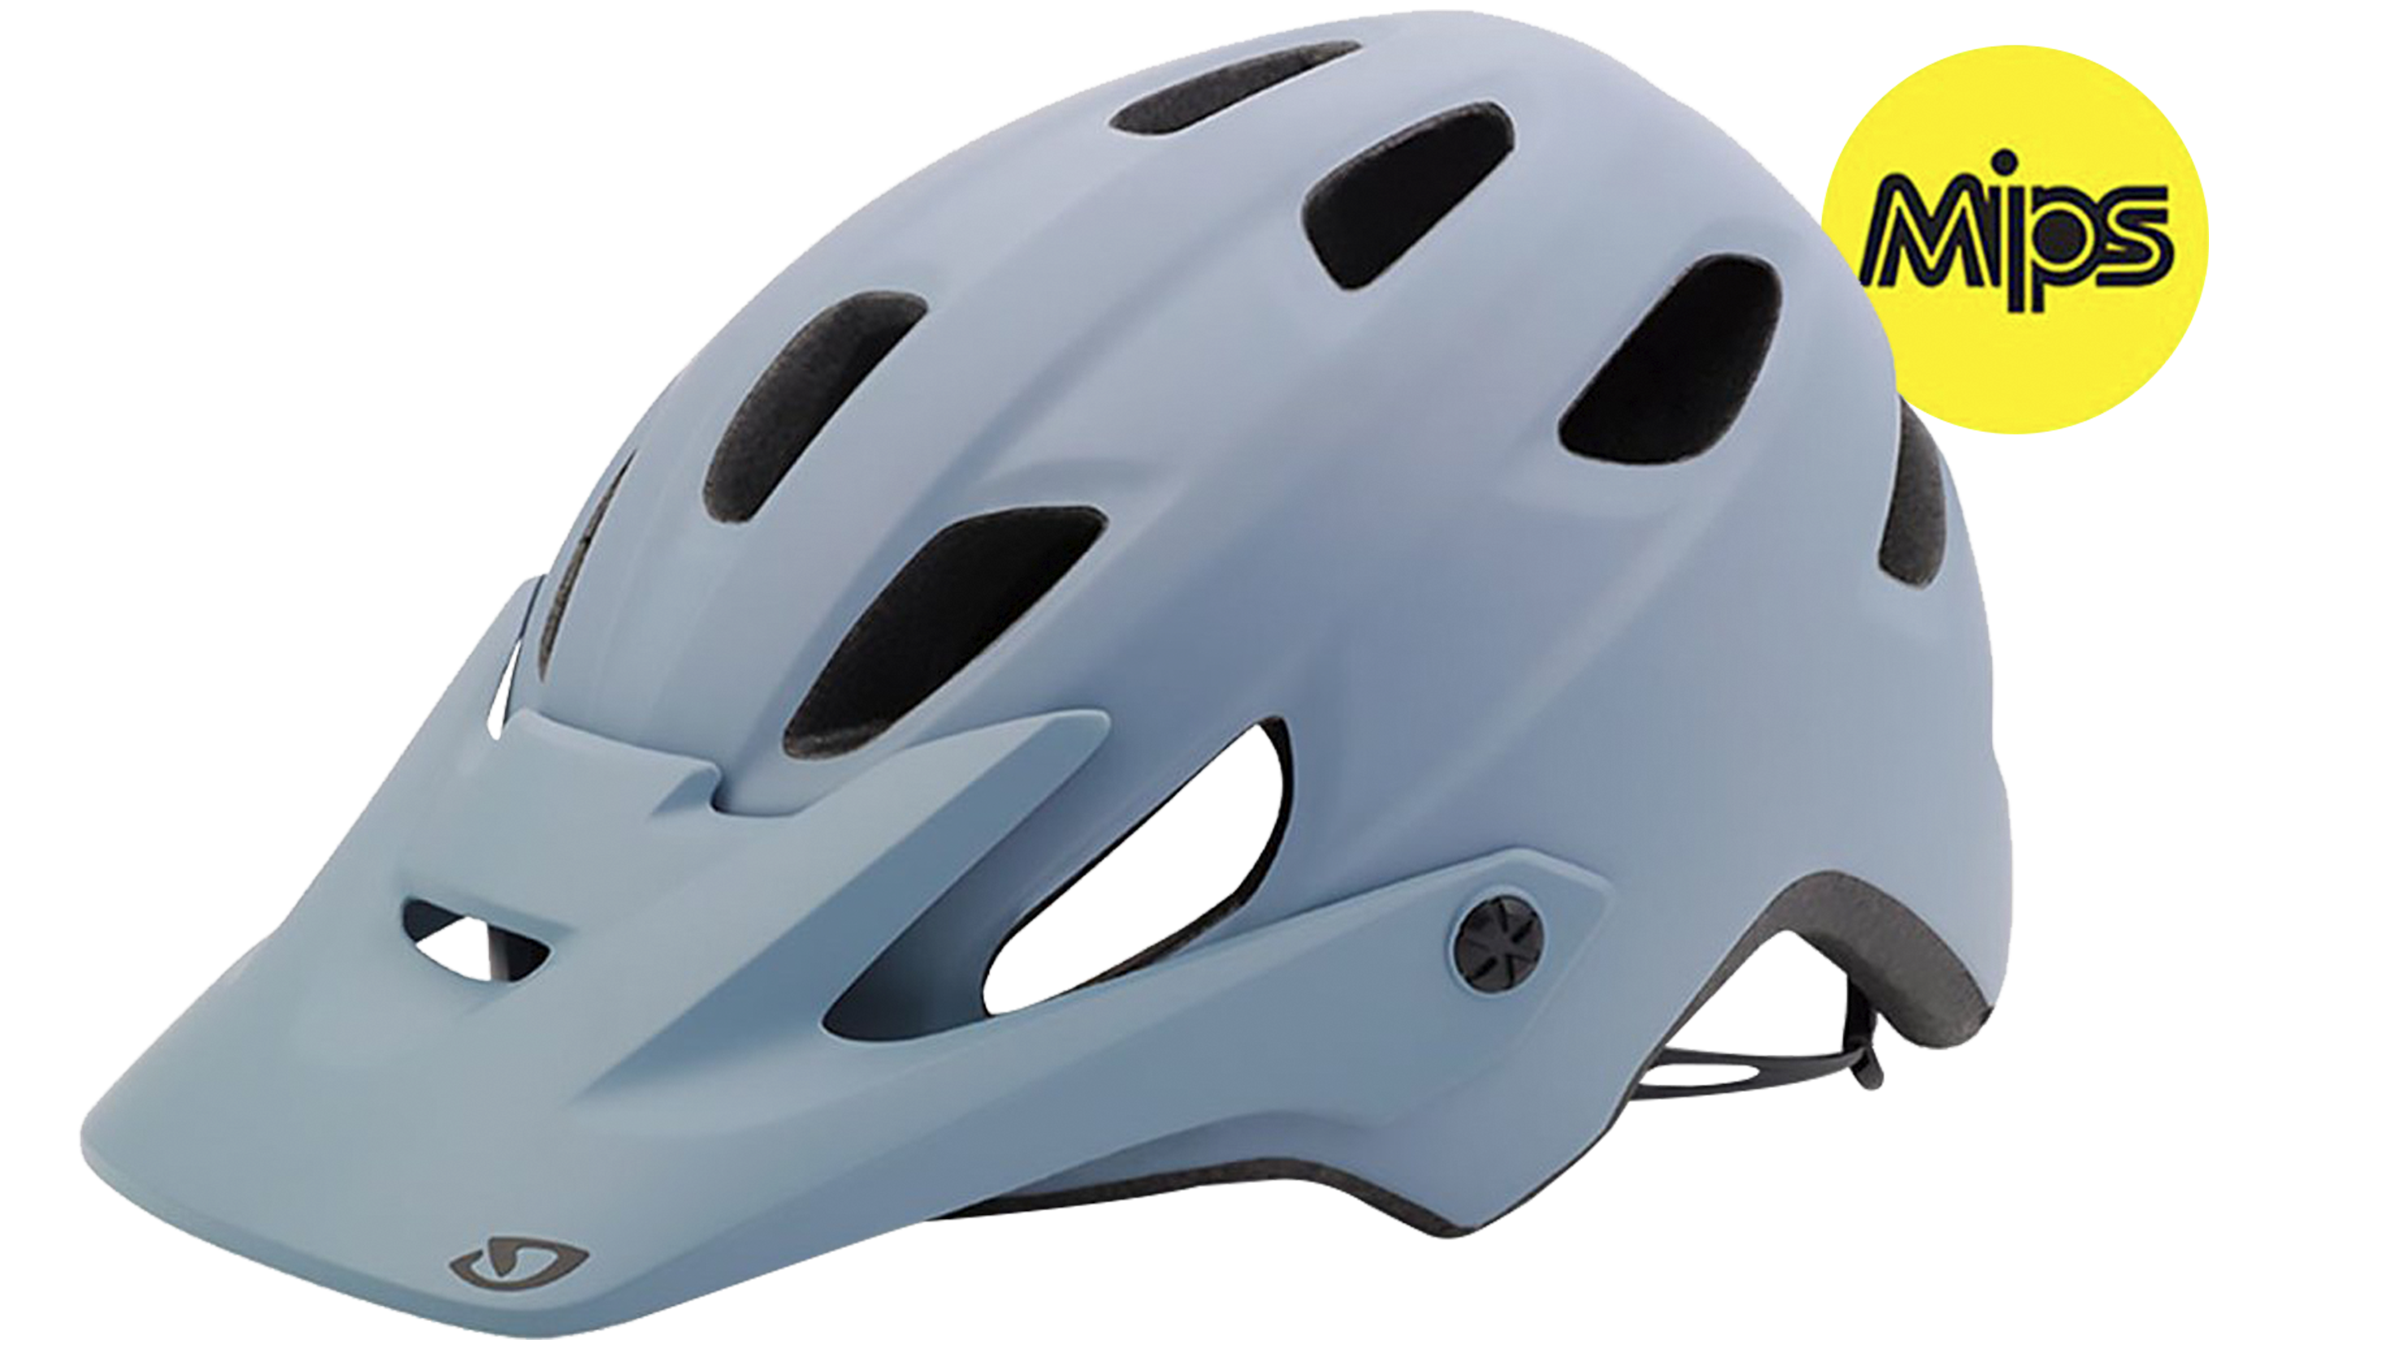 giro chronicle mips bike helmet